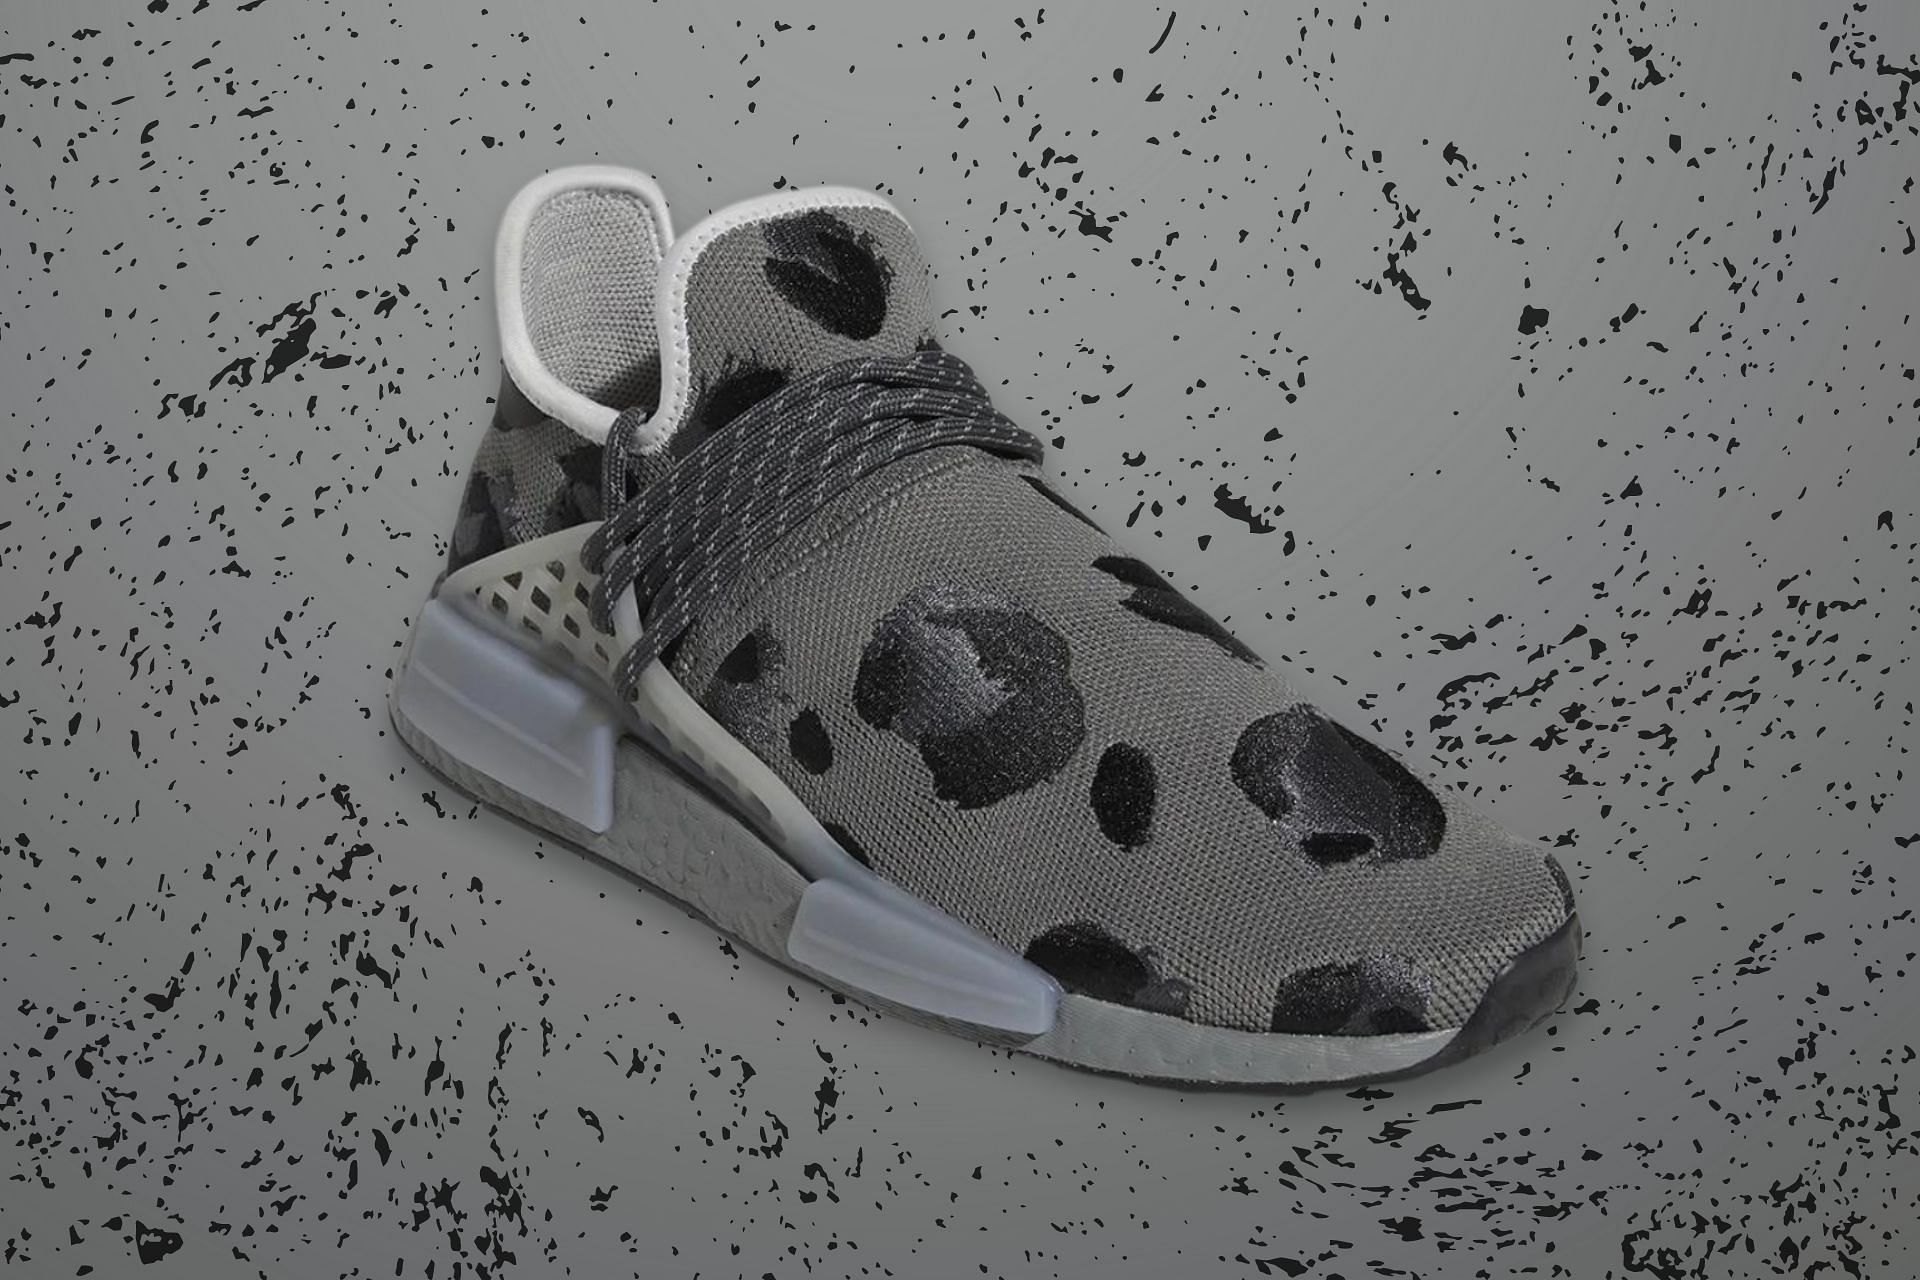 Pharrell Williams x Adidas Hu NMD Grey Animal Print shoes (Image via Adidas)